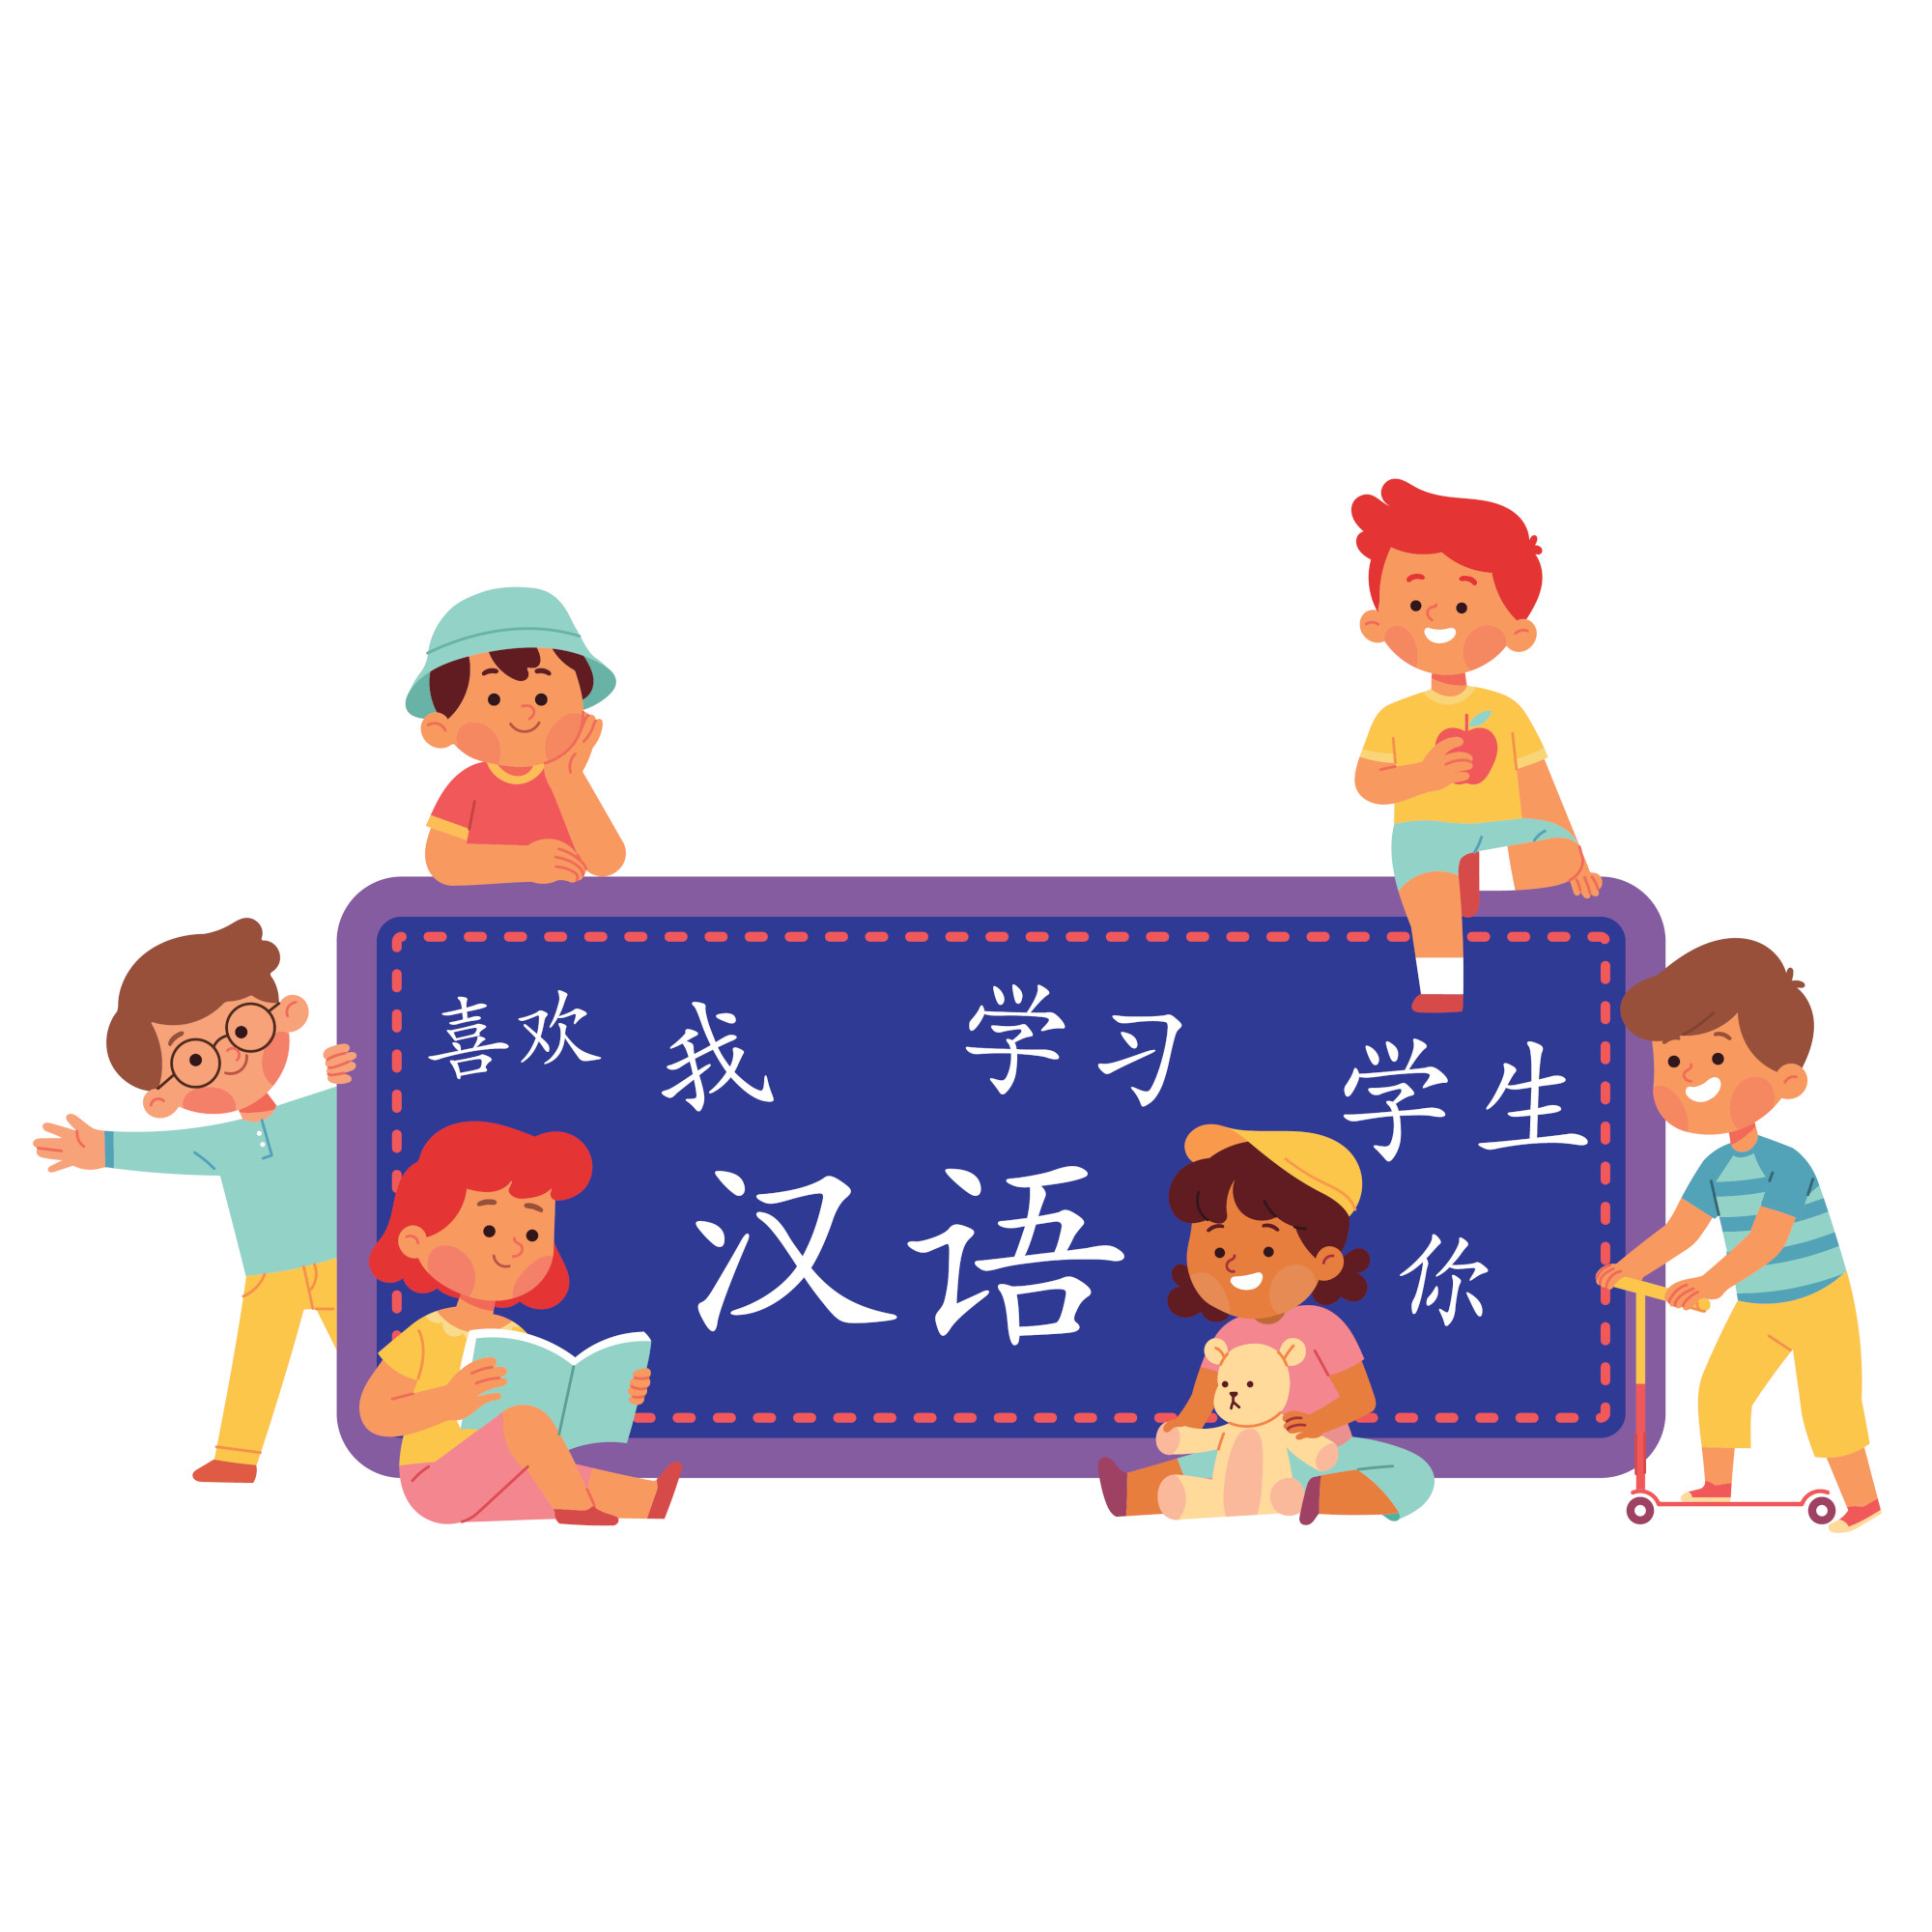 Beberapa Istilah Anak dan Panggilan kepada Anak dalam Bahasa Mandarin